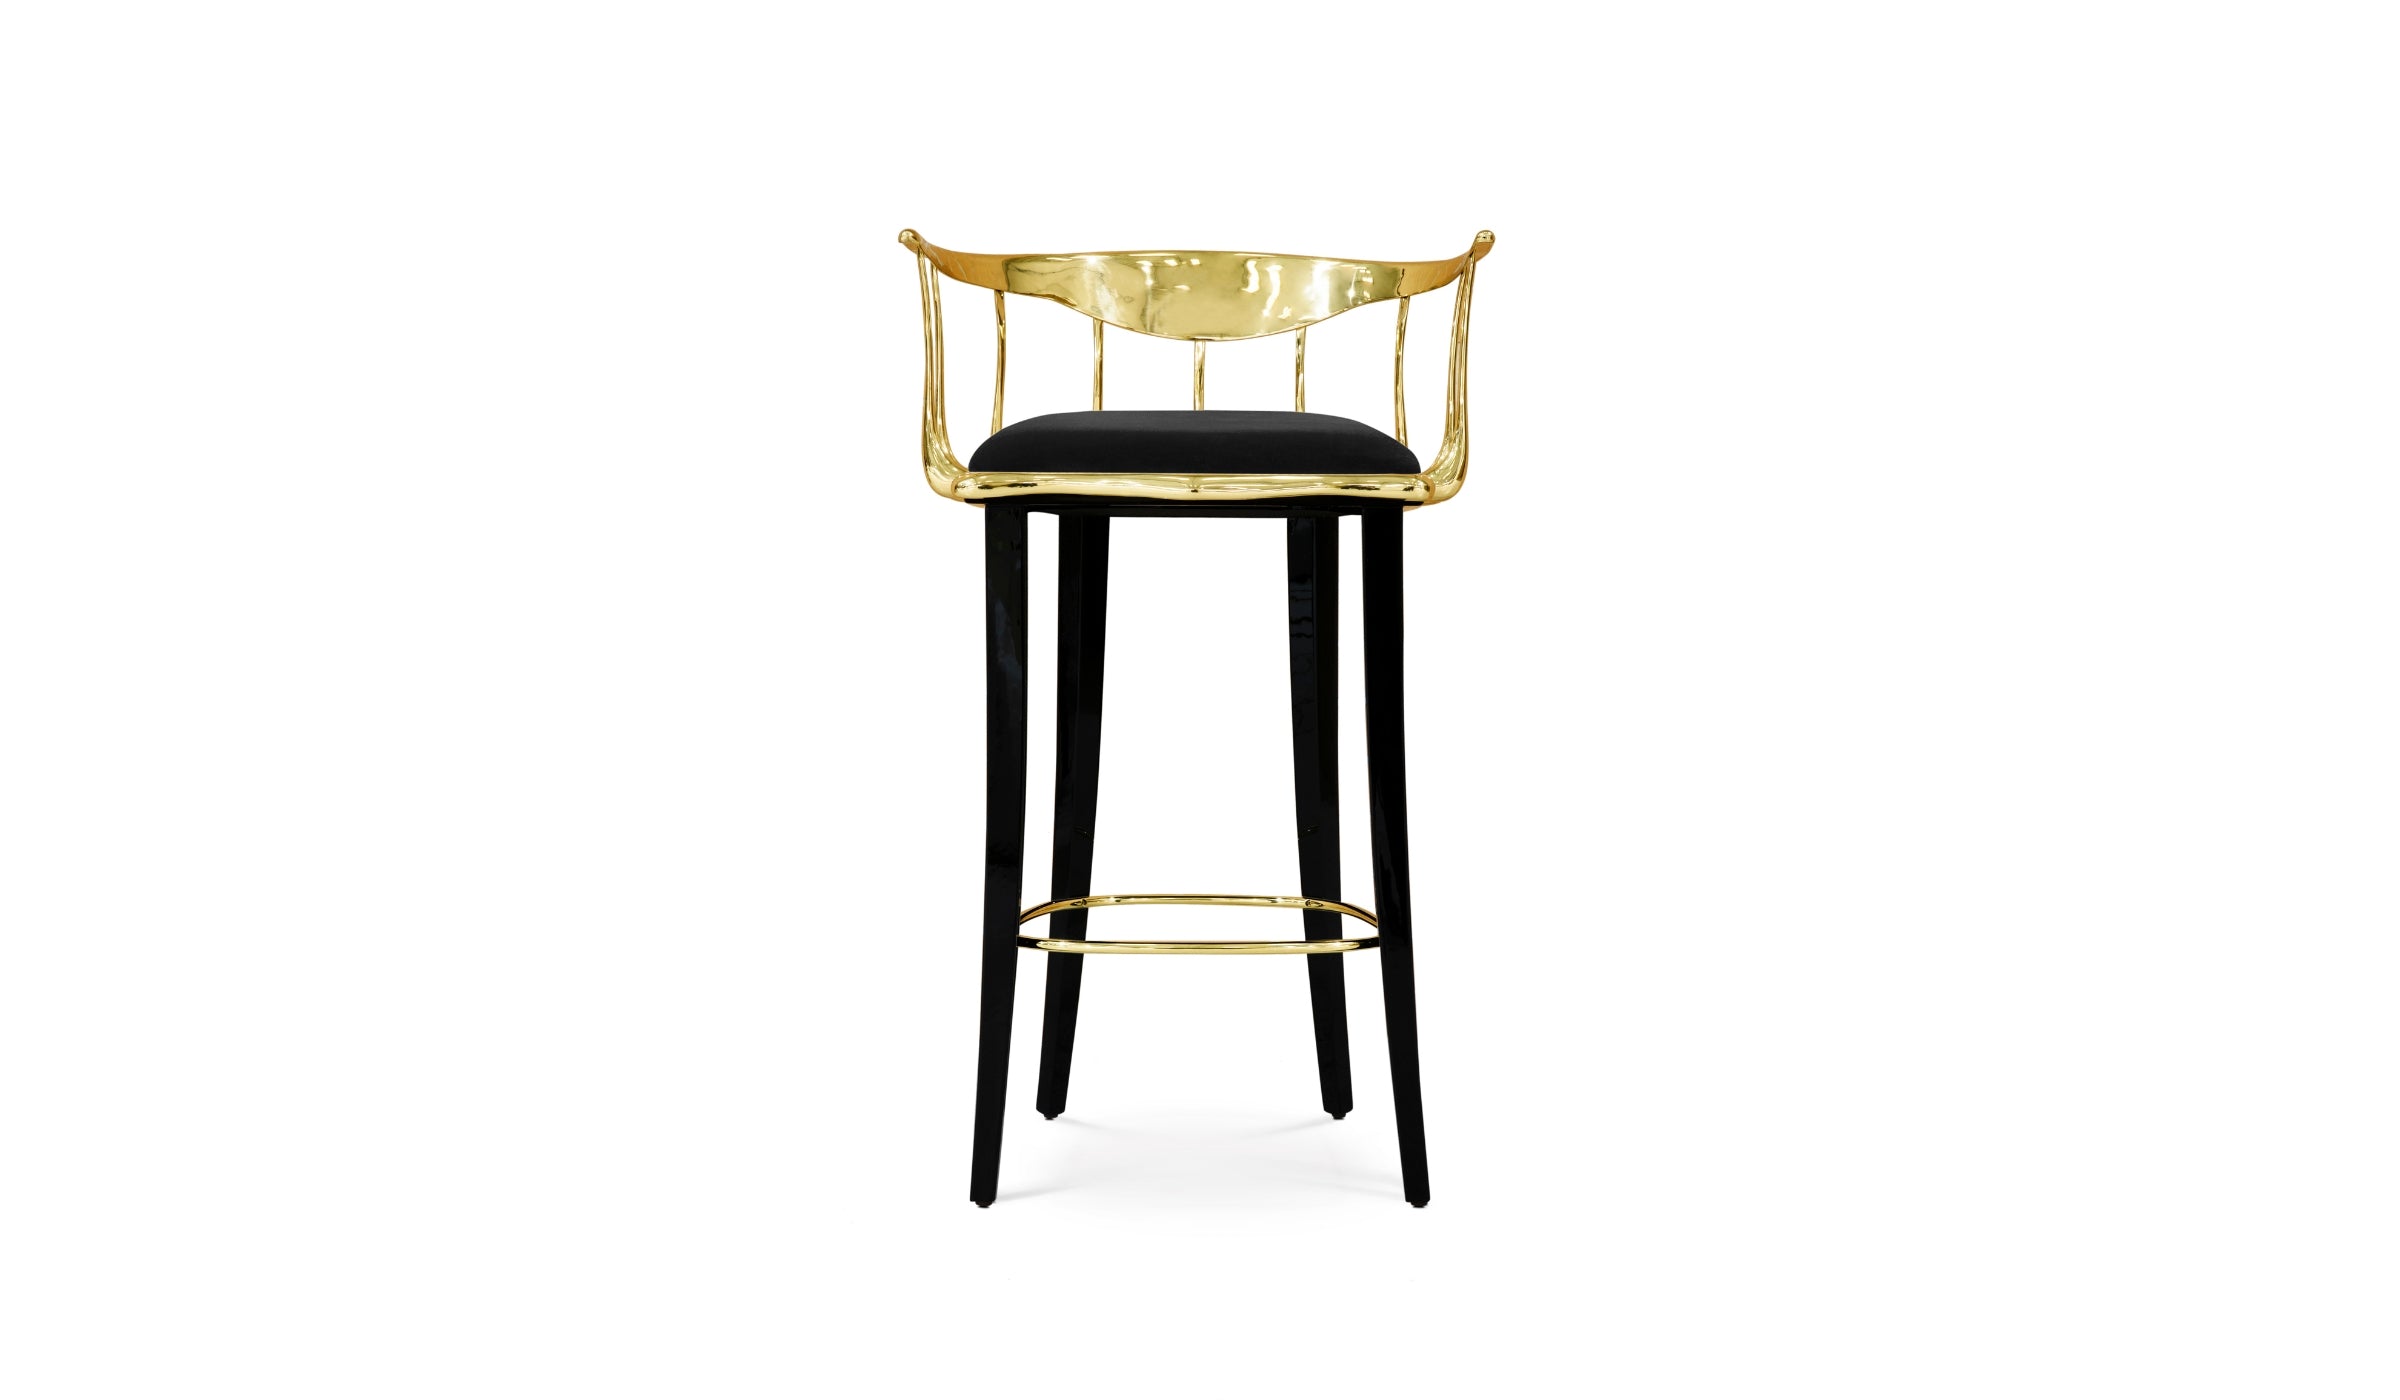 N°11 - Surrealist design bar chair in brass and black velvet